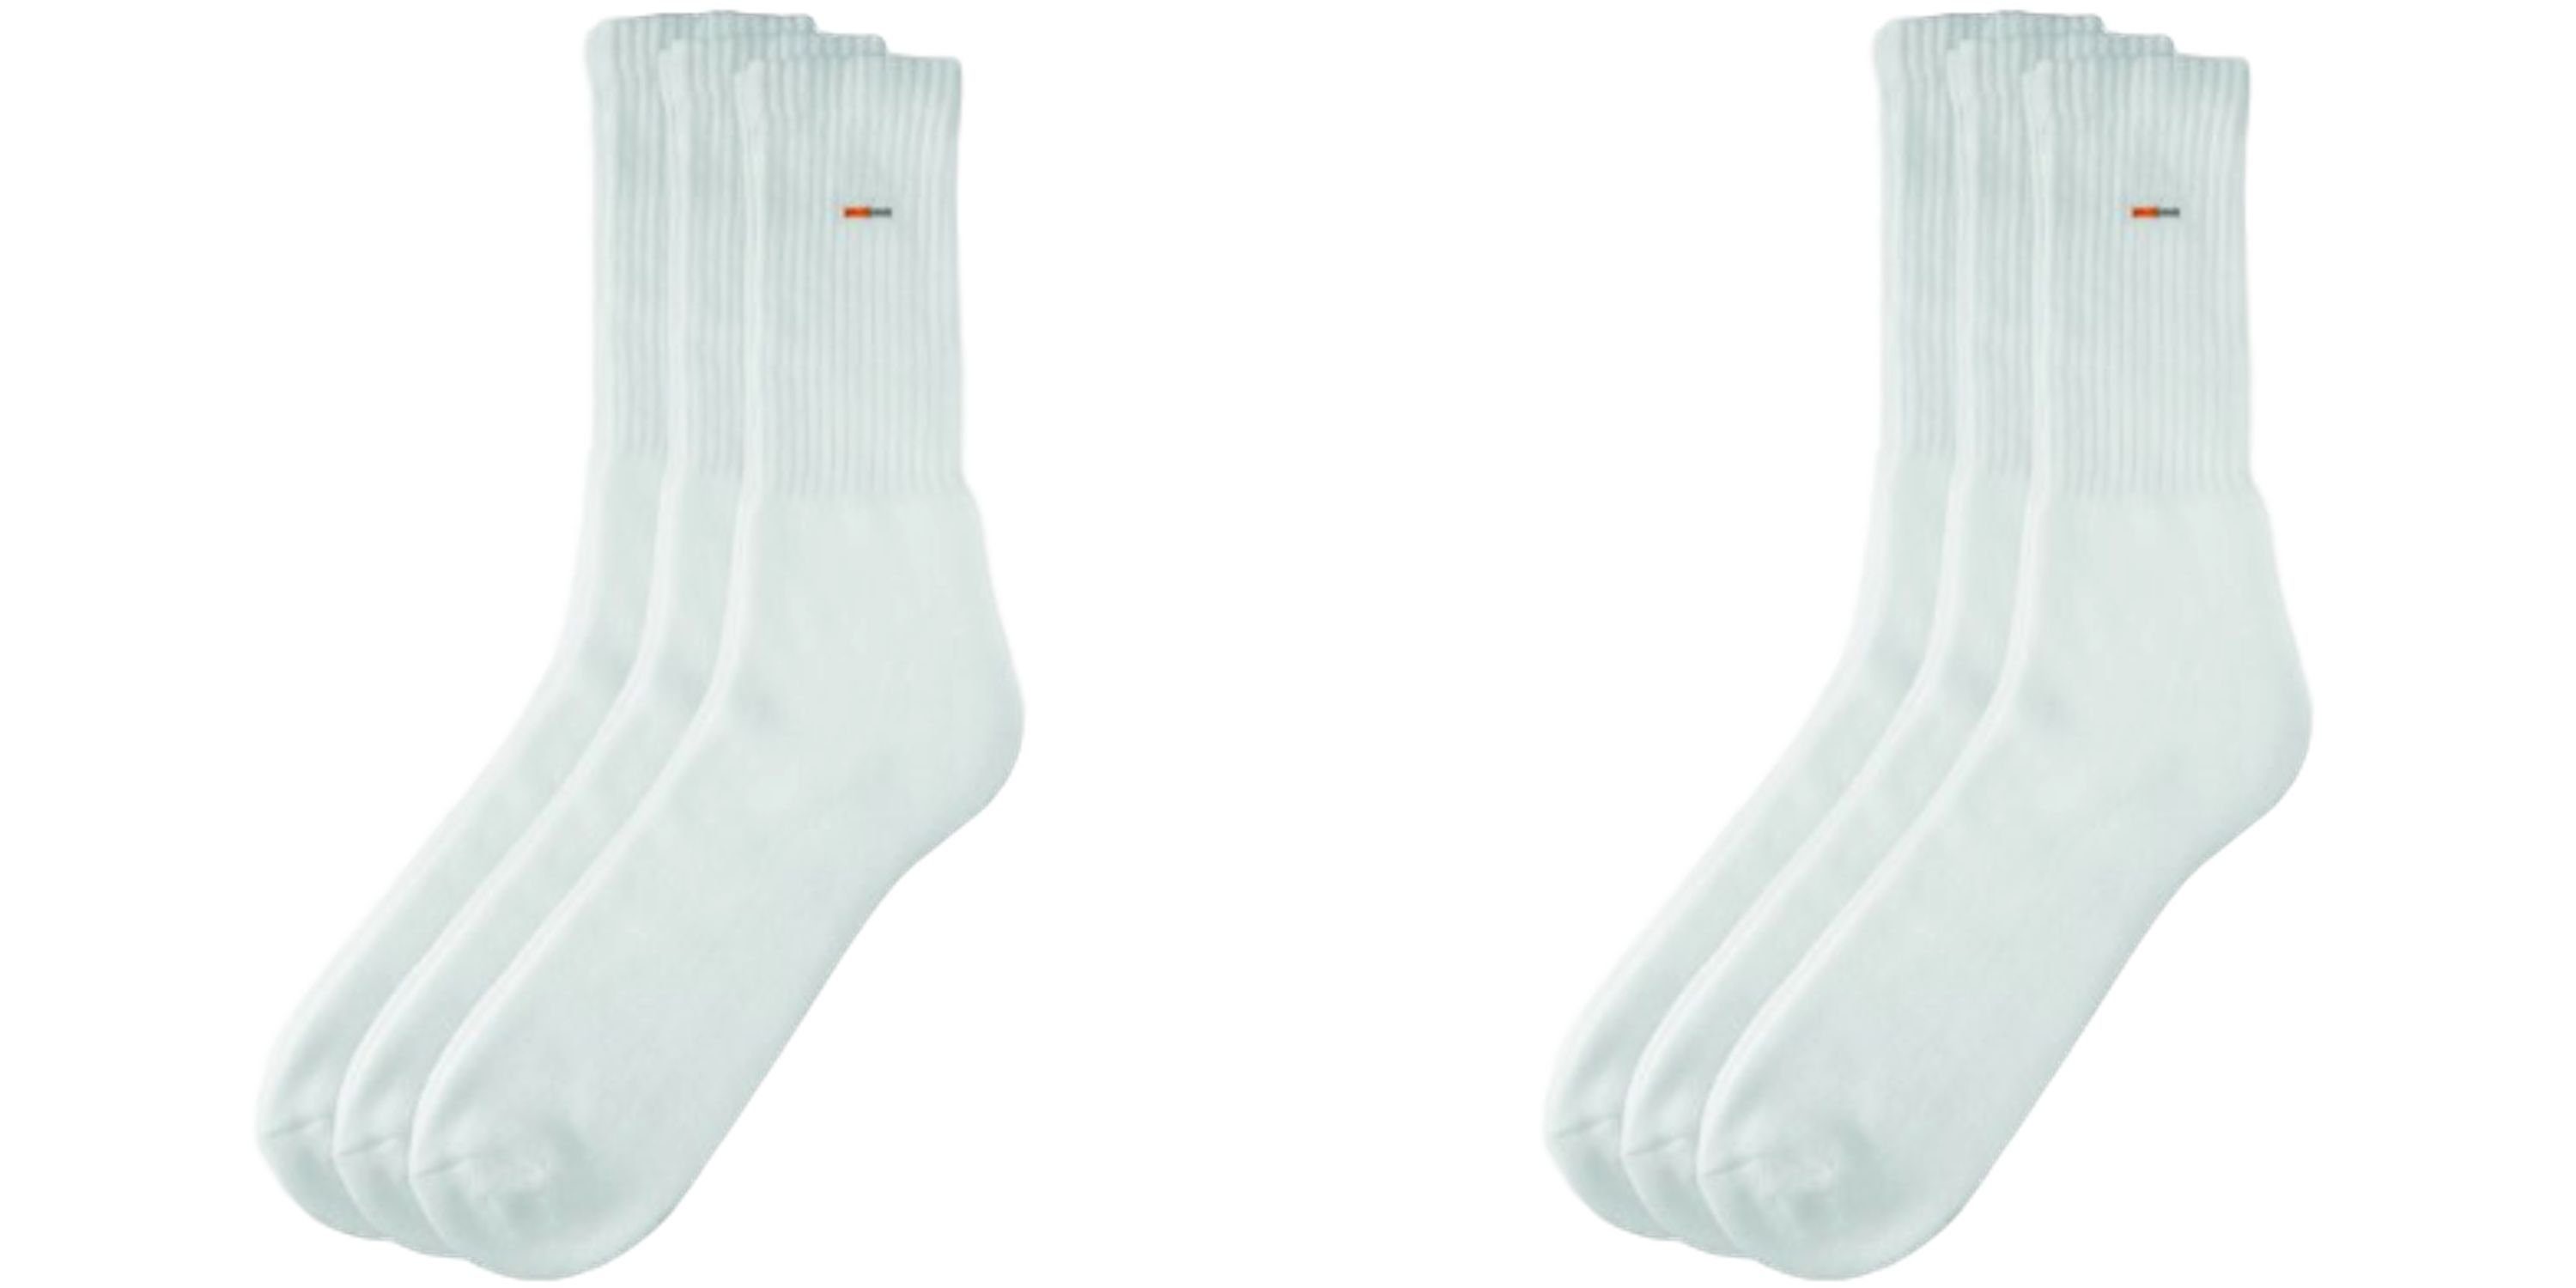 Camano Sportsocken Basic Socken weiss (6-Paar) Farbe: Paar 6 Größe: - - Sportsocke - 6 Paar A11 38 weiss 35